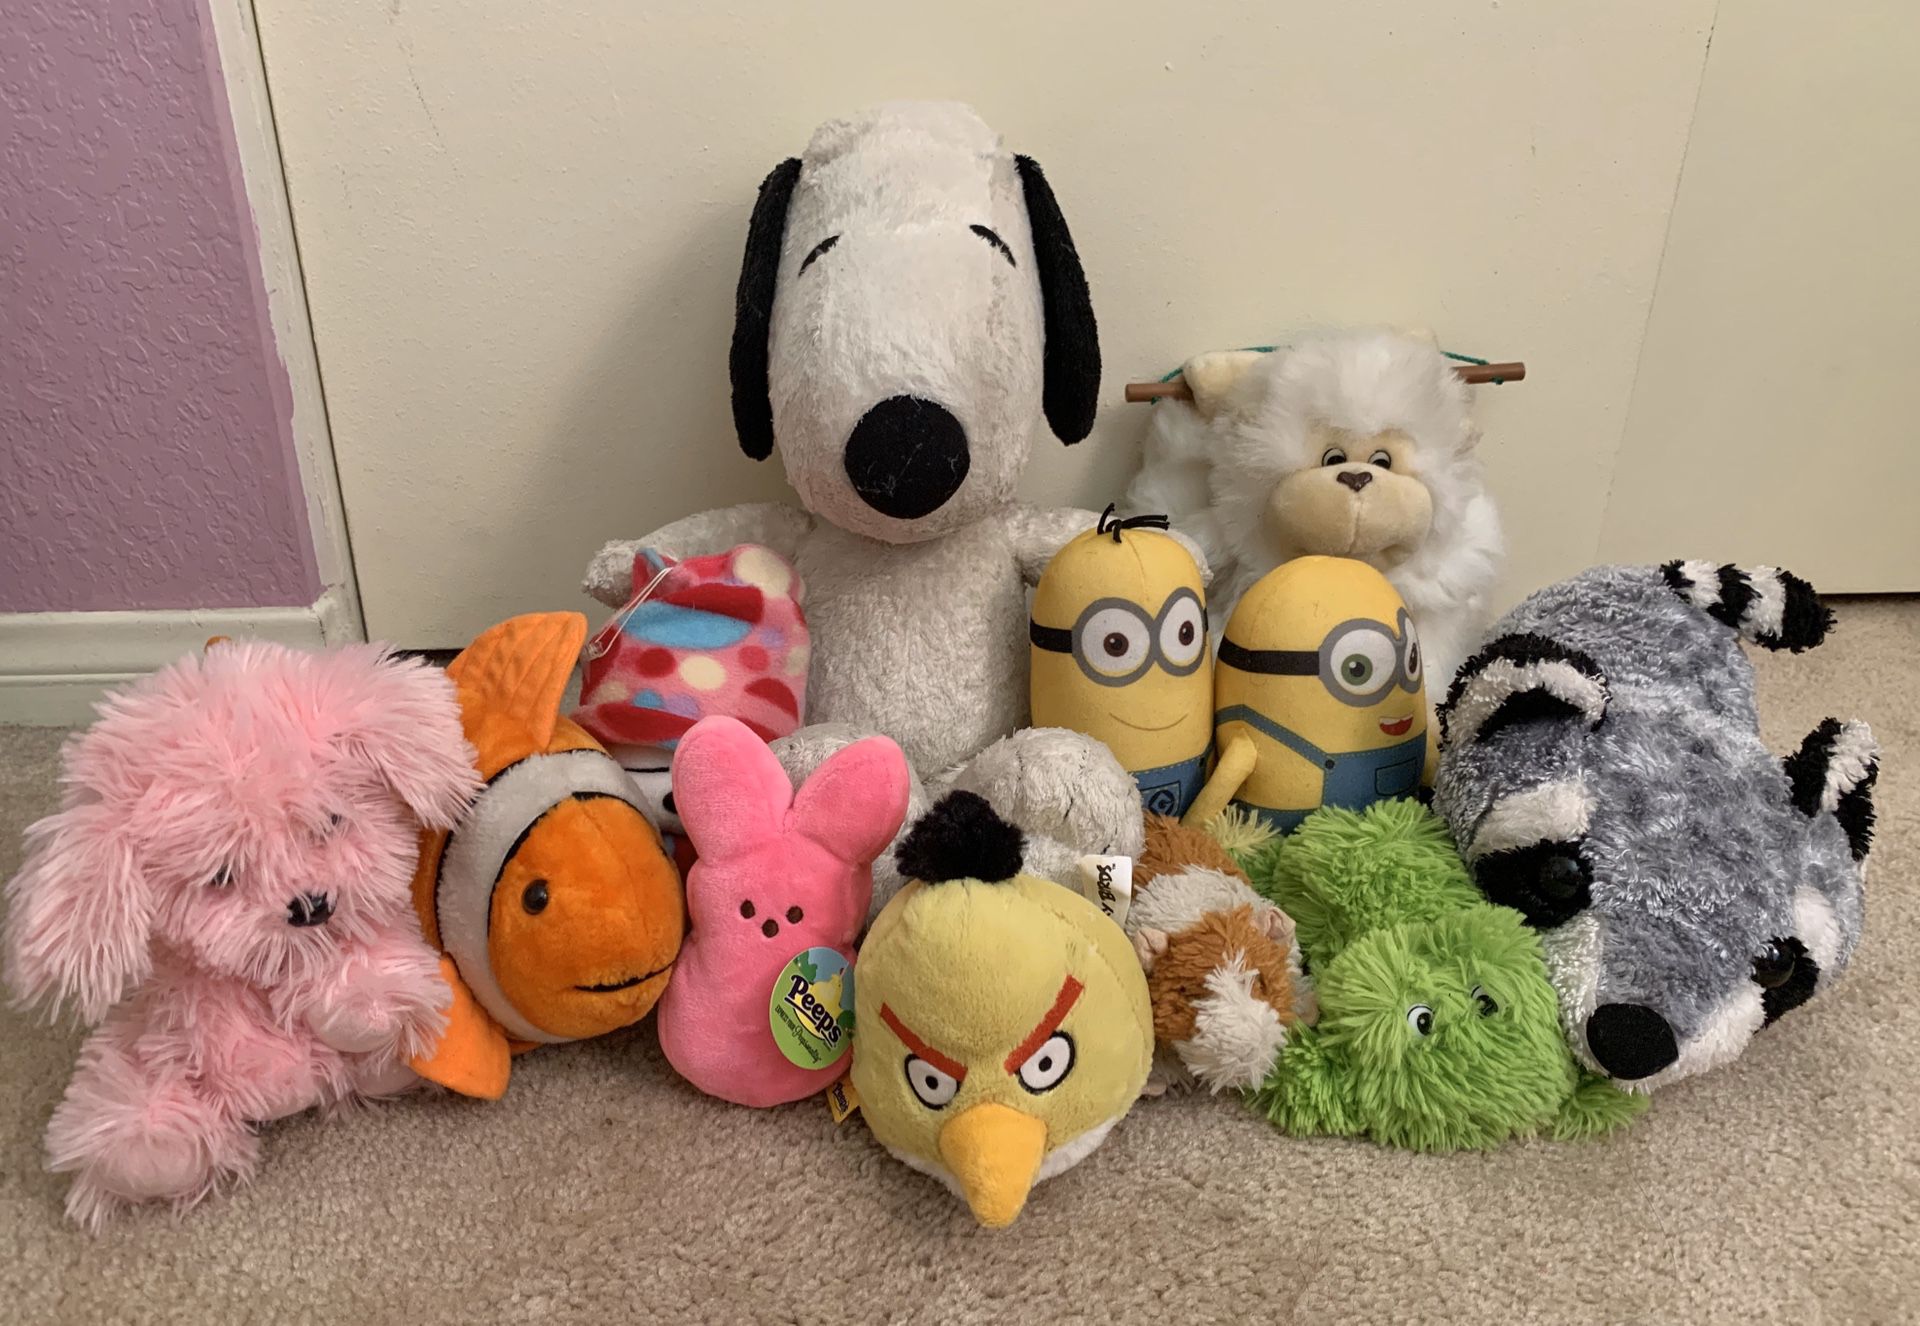 Plushies Bundle| Stuffed Animal Bundle, Cute Plushies, Large Peanuts Snoopy Plush, Hanging monkey plush, minion plushies, 12 total